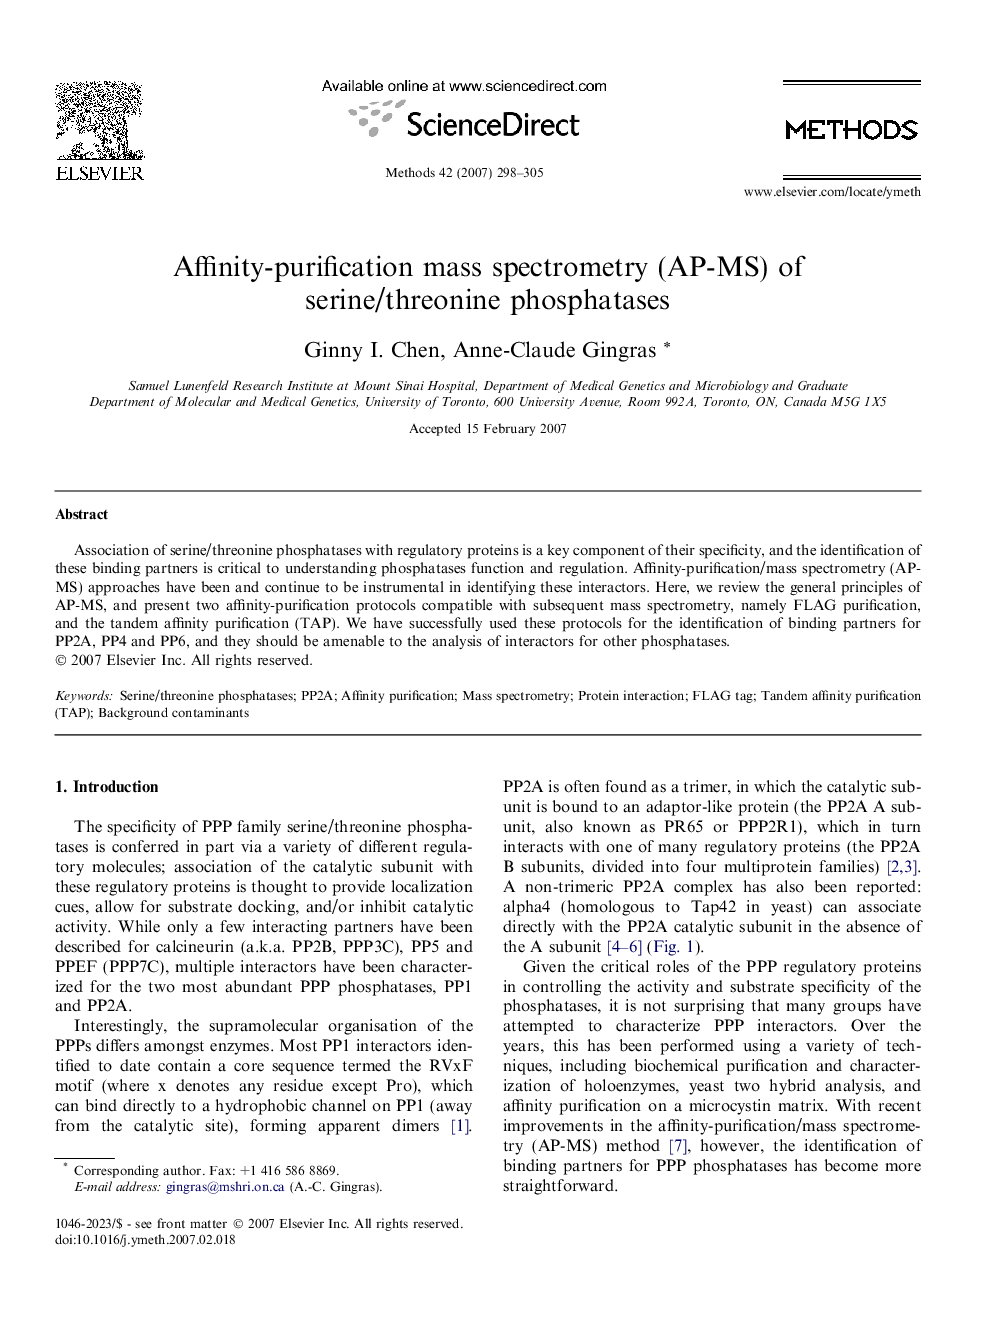 Affinity-purification mass spectrometry (AP-MS) of serine/threonine phosphatases